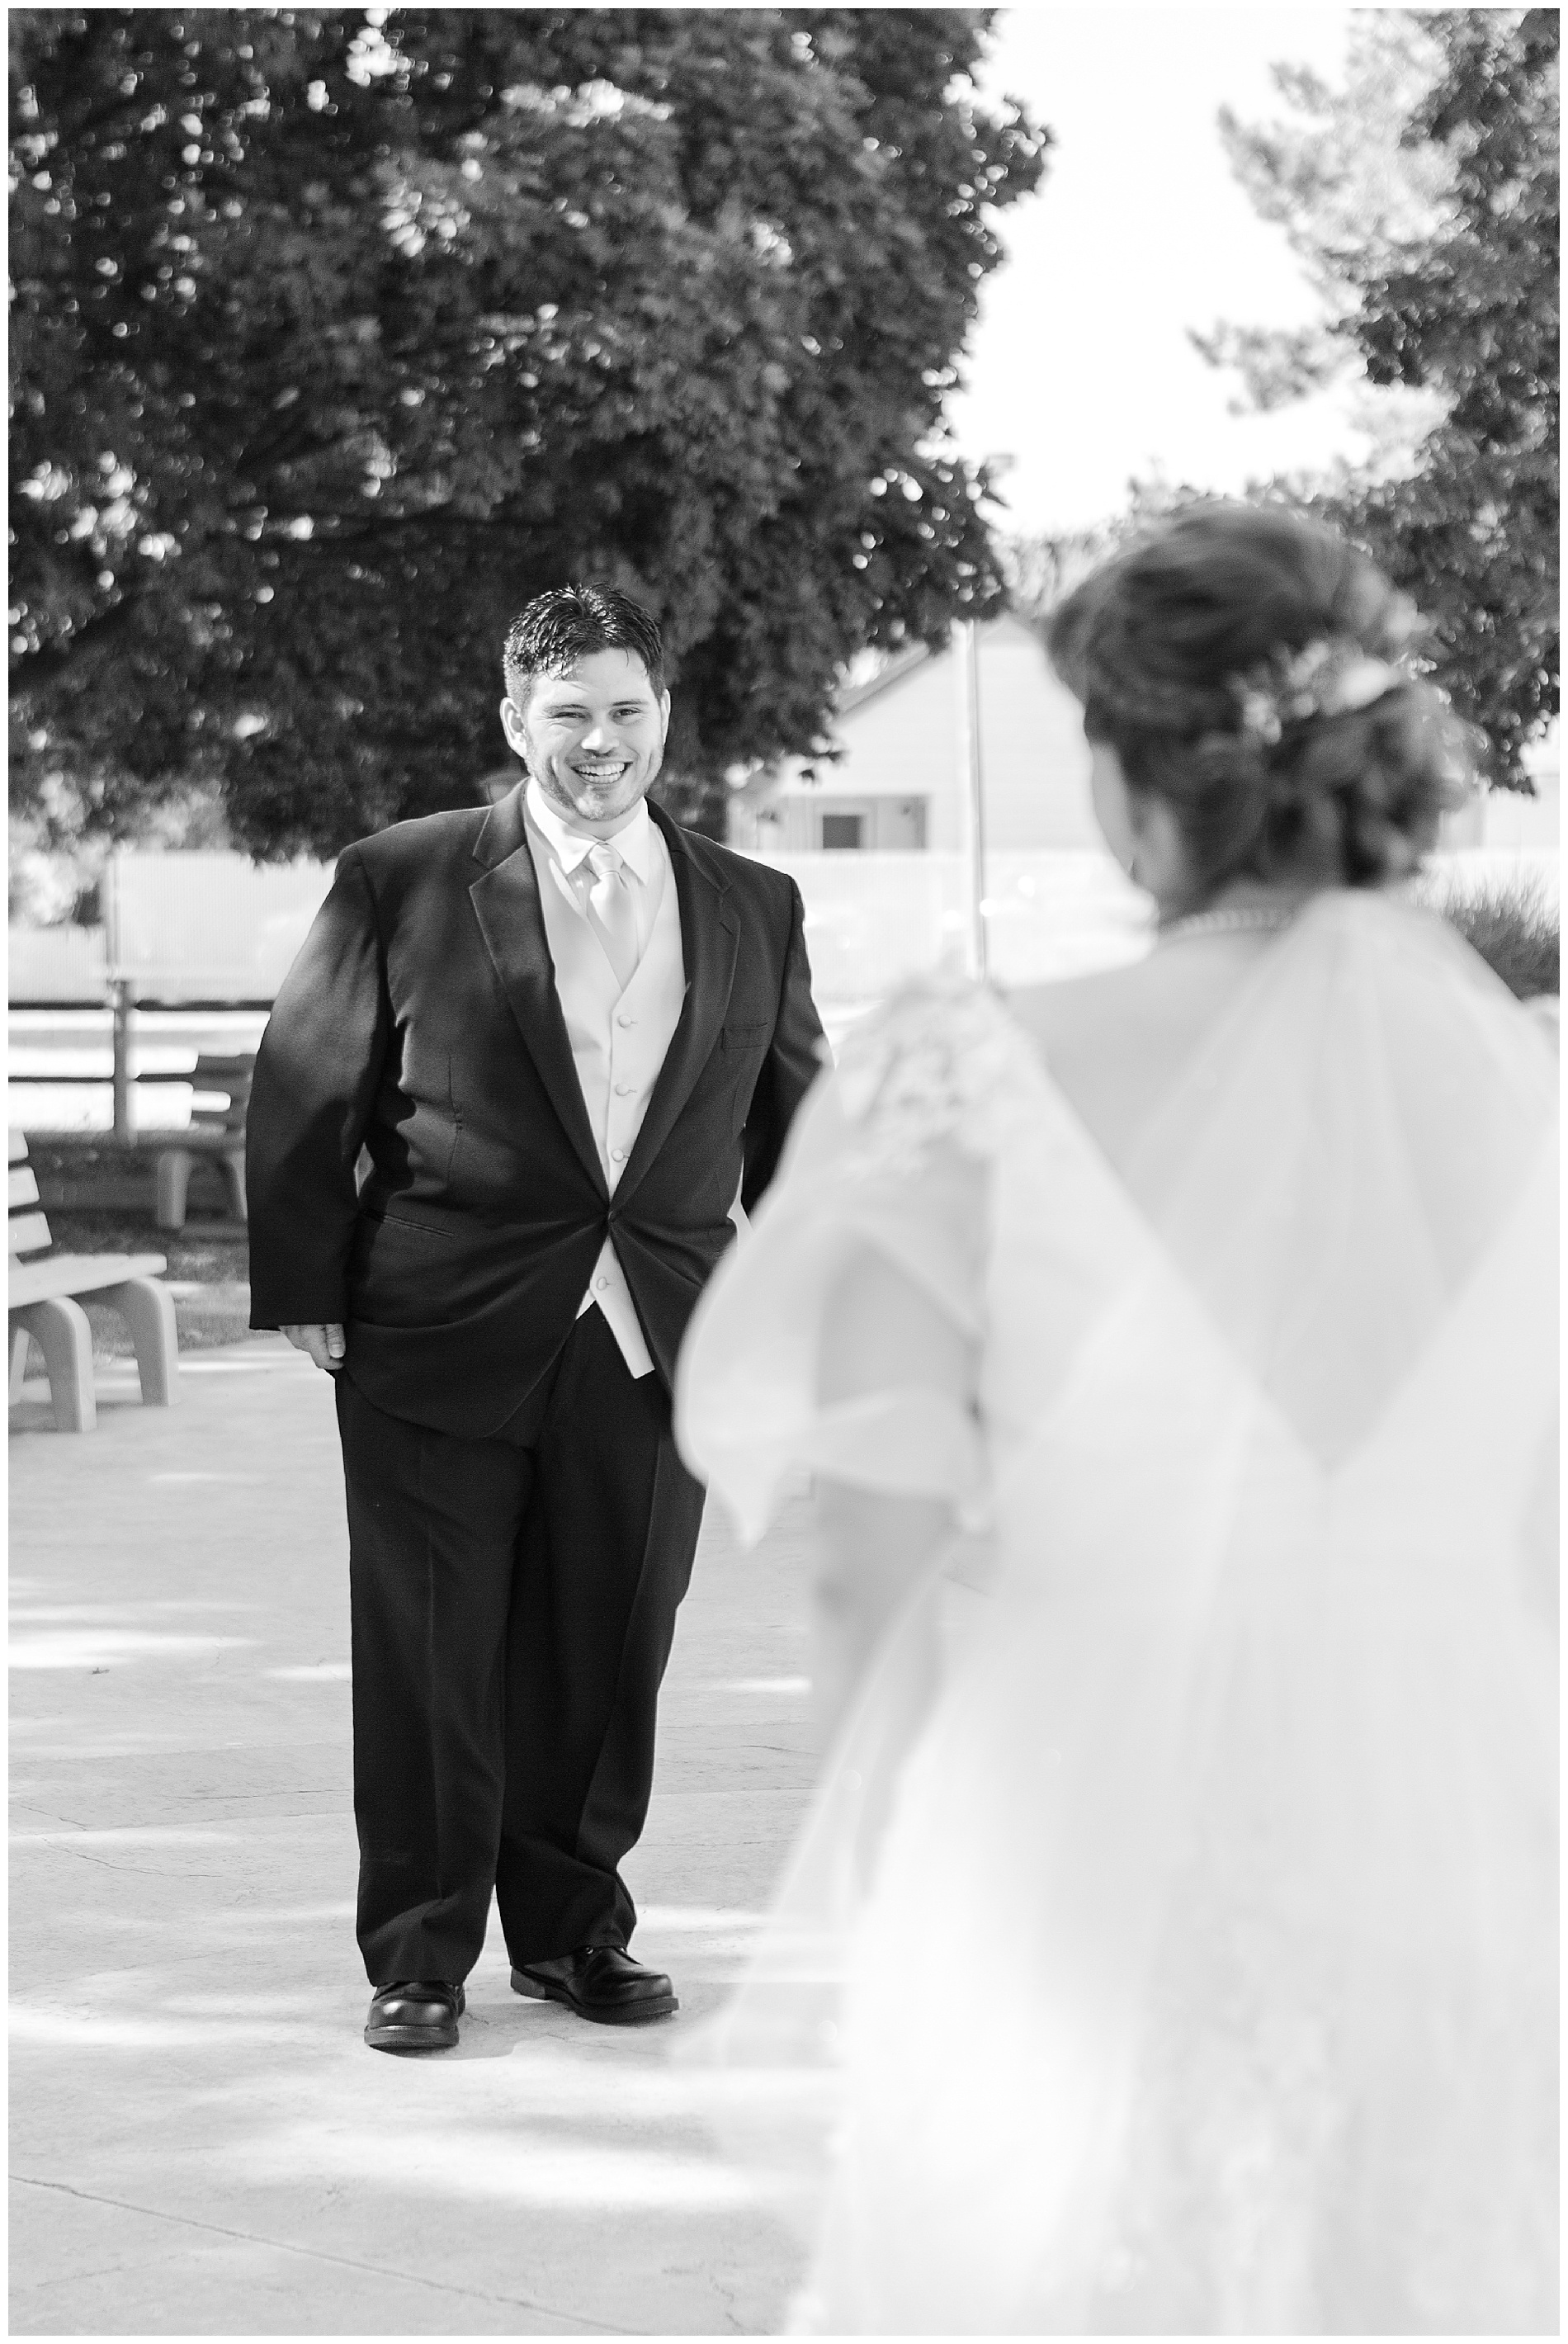 The first look | Idaho wedding photographer | Robin Wheeler Photography